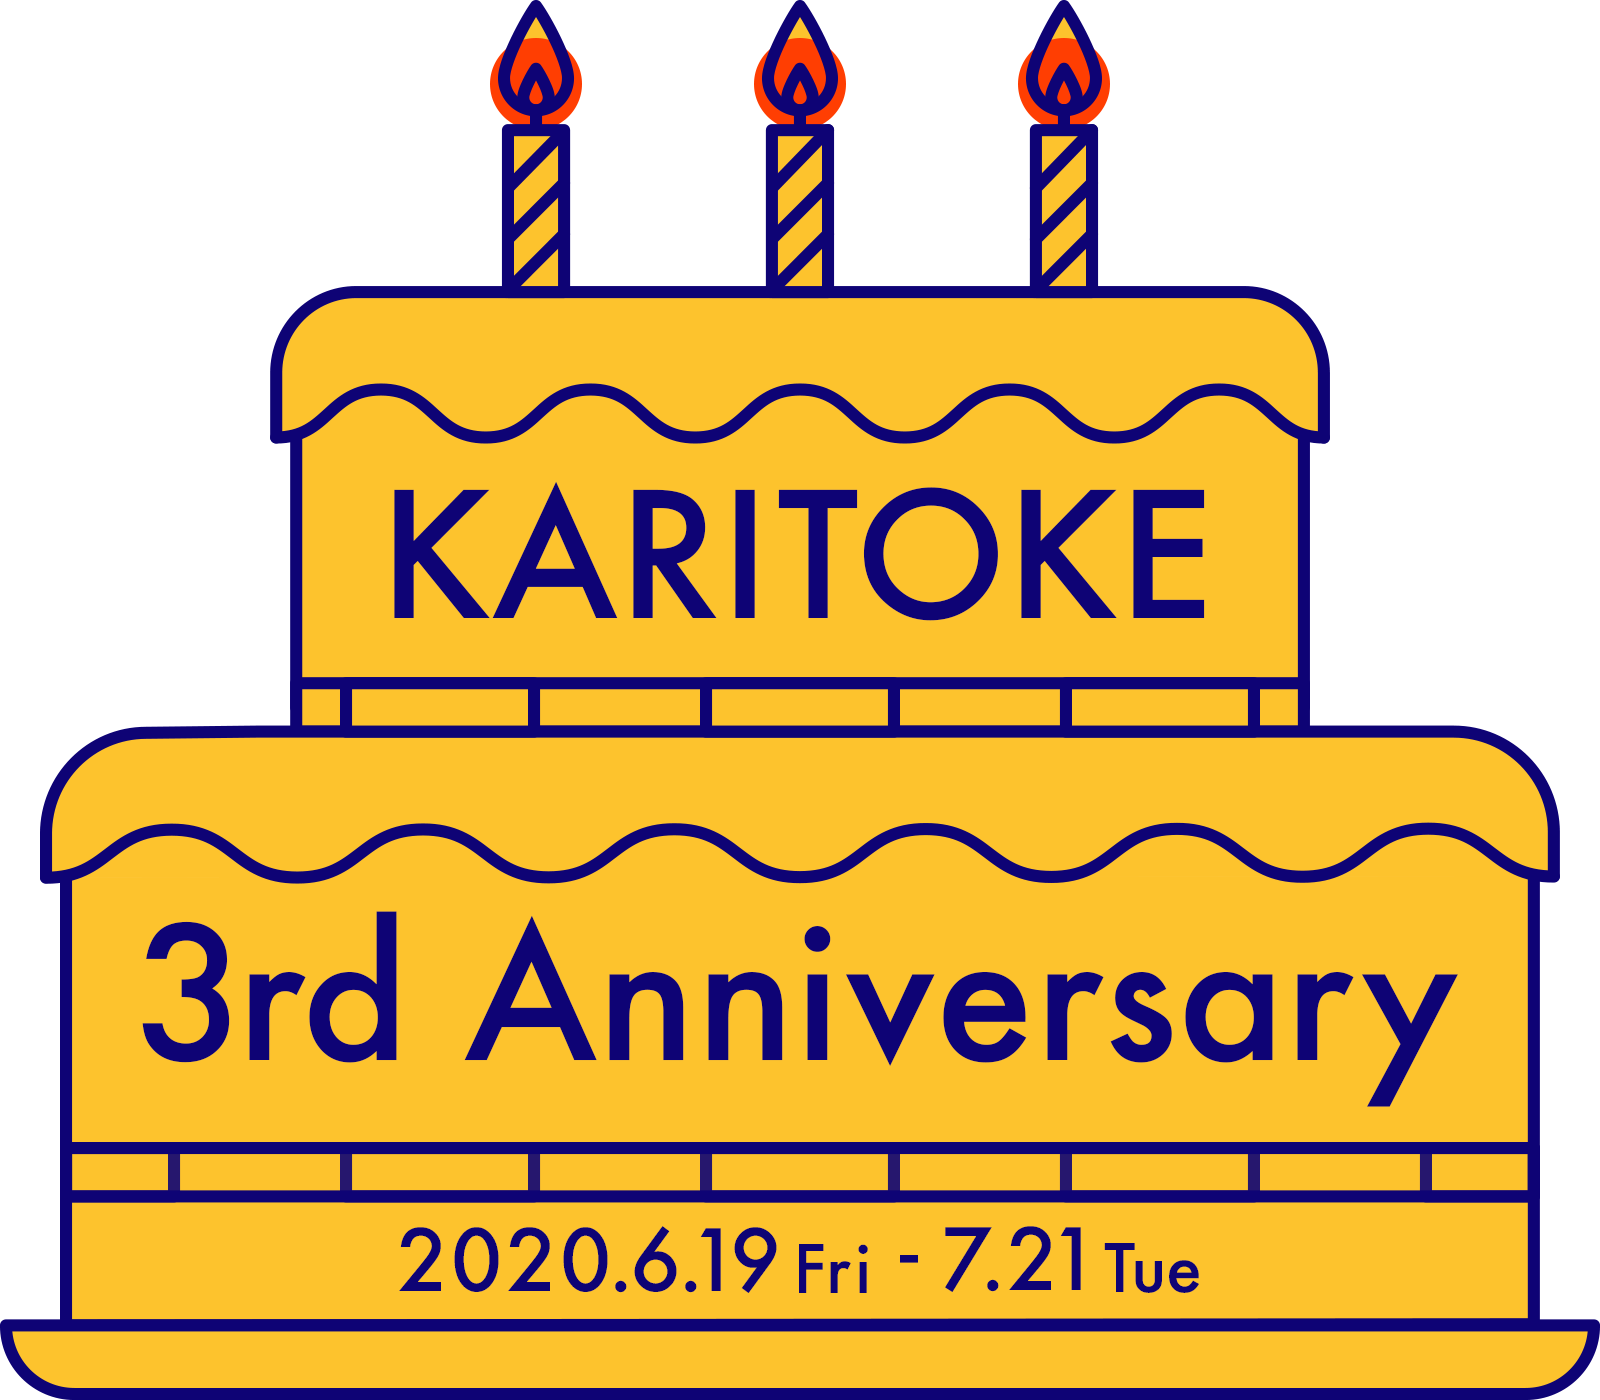 KARITOKE 3rd Anniversary 2020.6.19Fri-7.21Tue